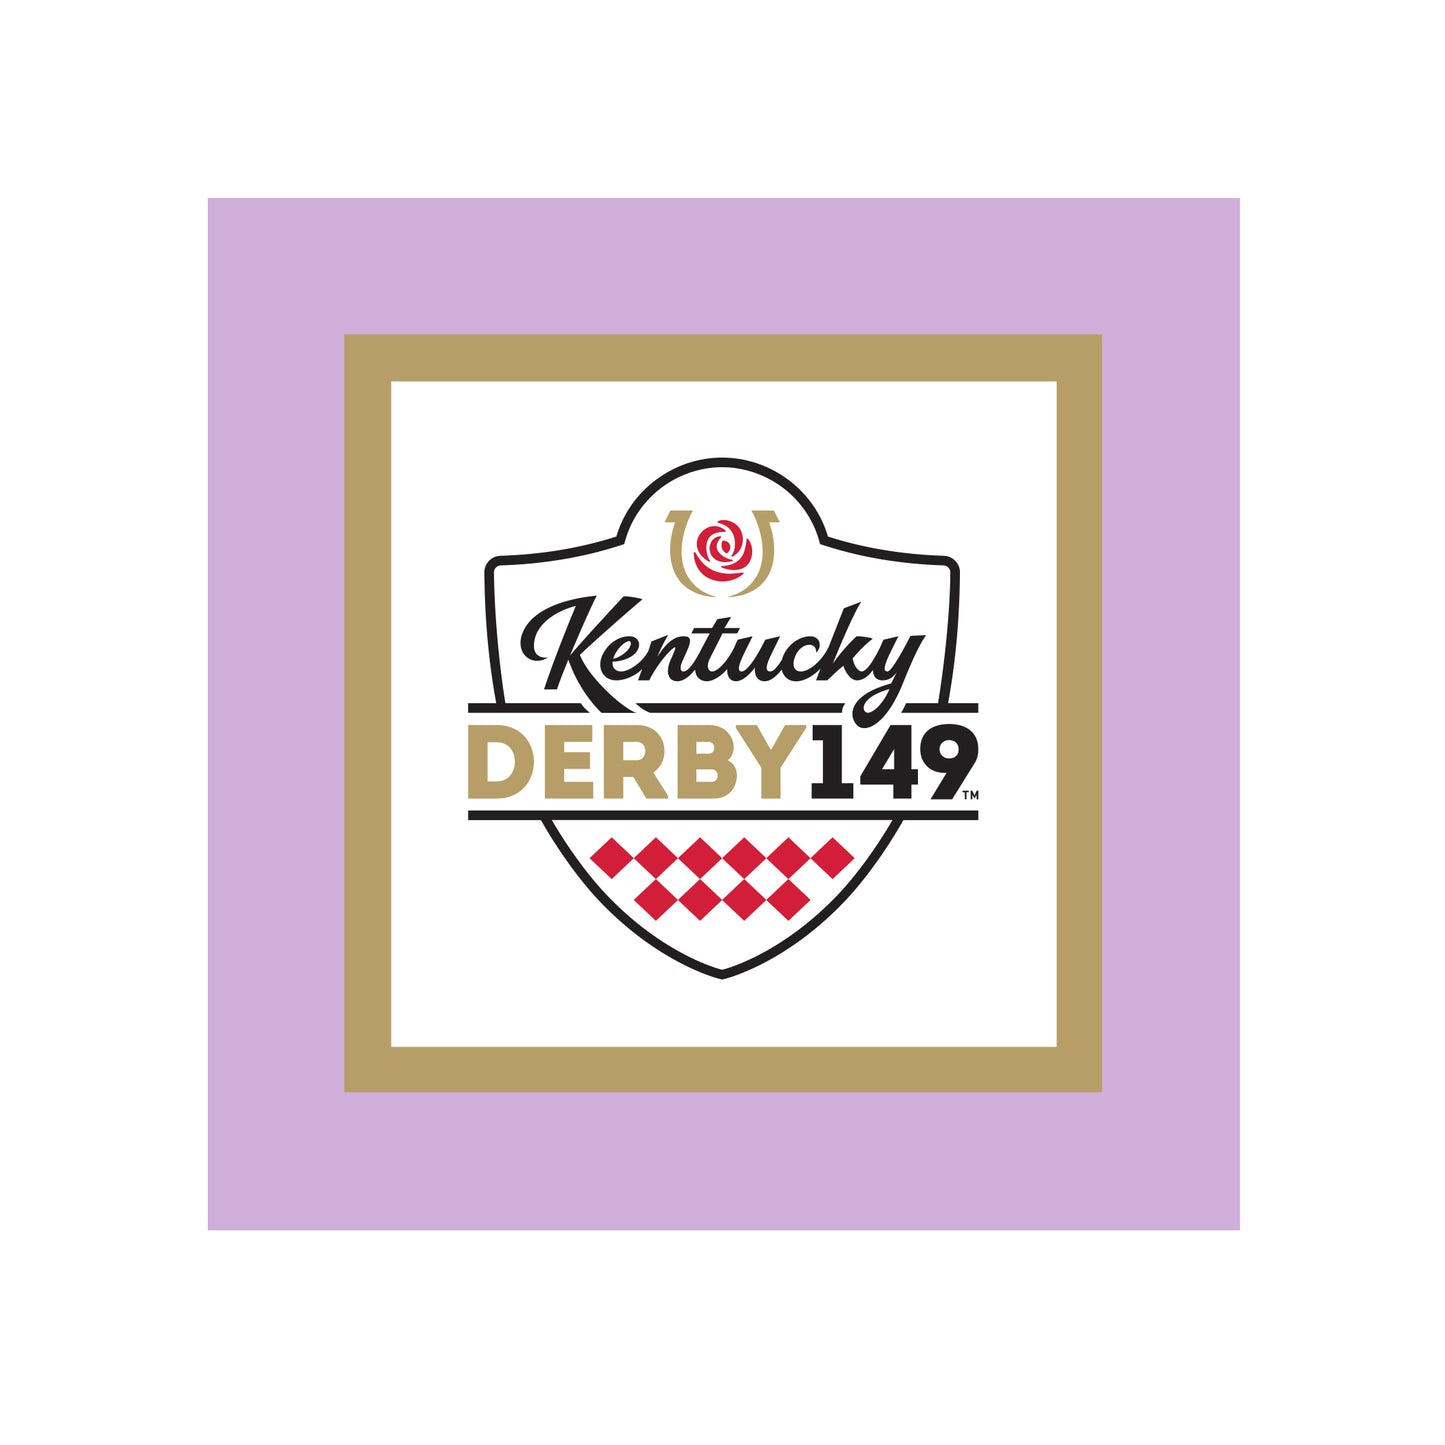 Kentucky Derby 149th Beverage Napkins